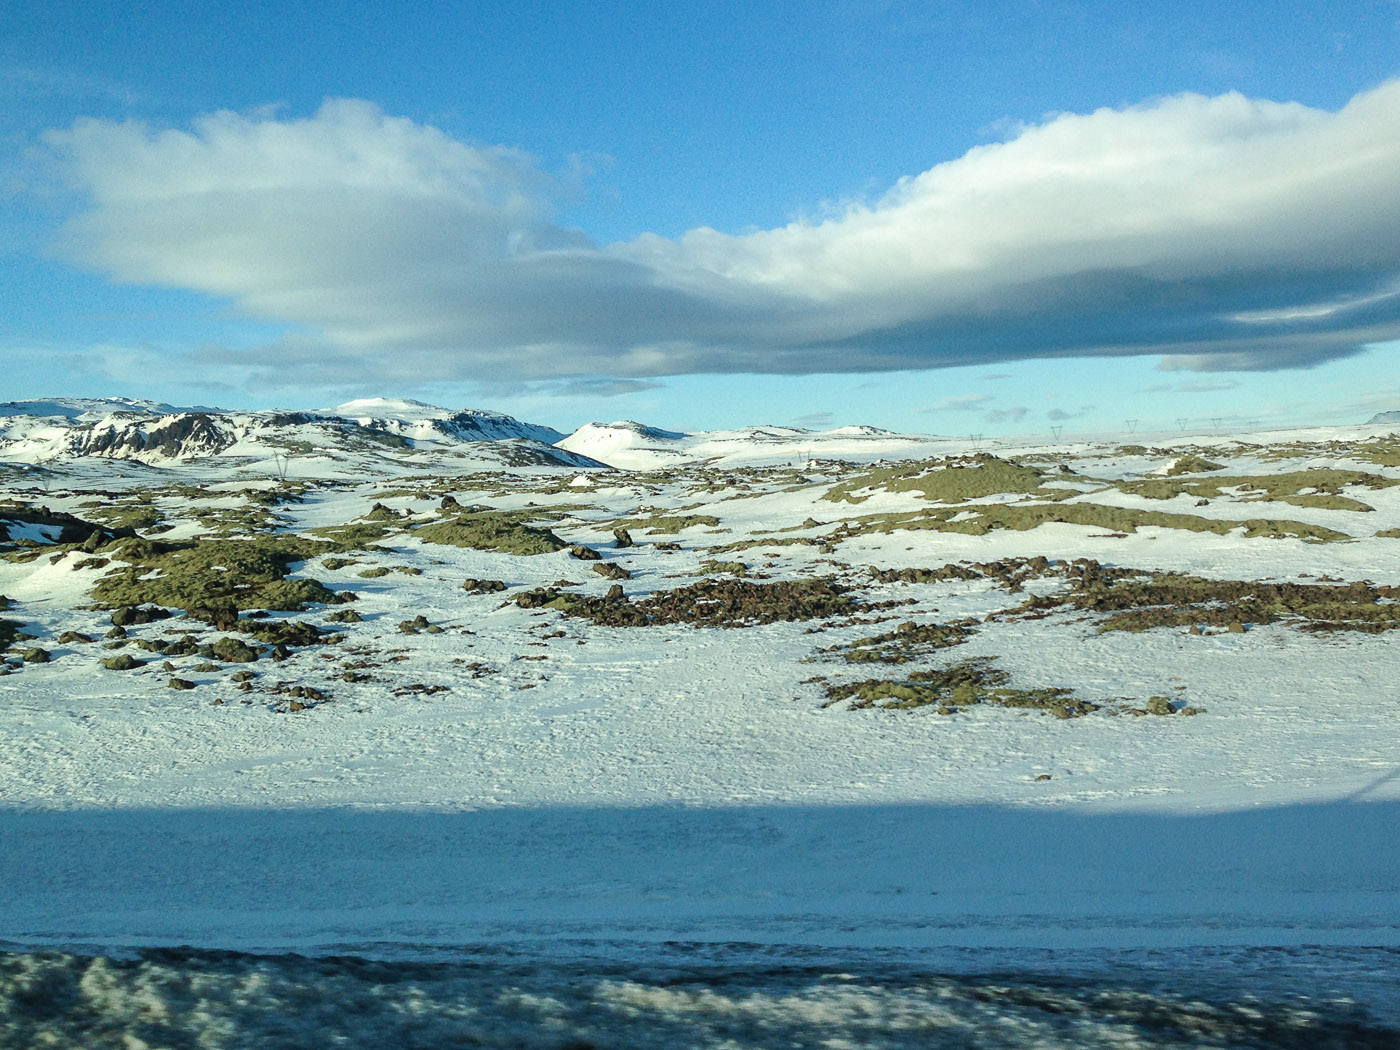 South coast. Driving back to Reykjavík! - Near Reykjavík - Hellisheiði. The last picture of this short trip :-). (2 March 2014)